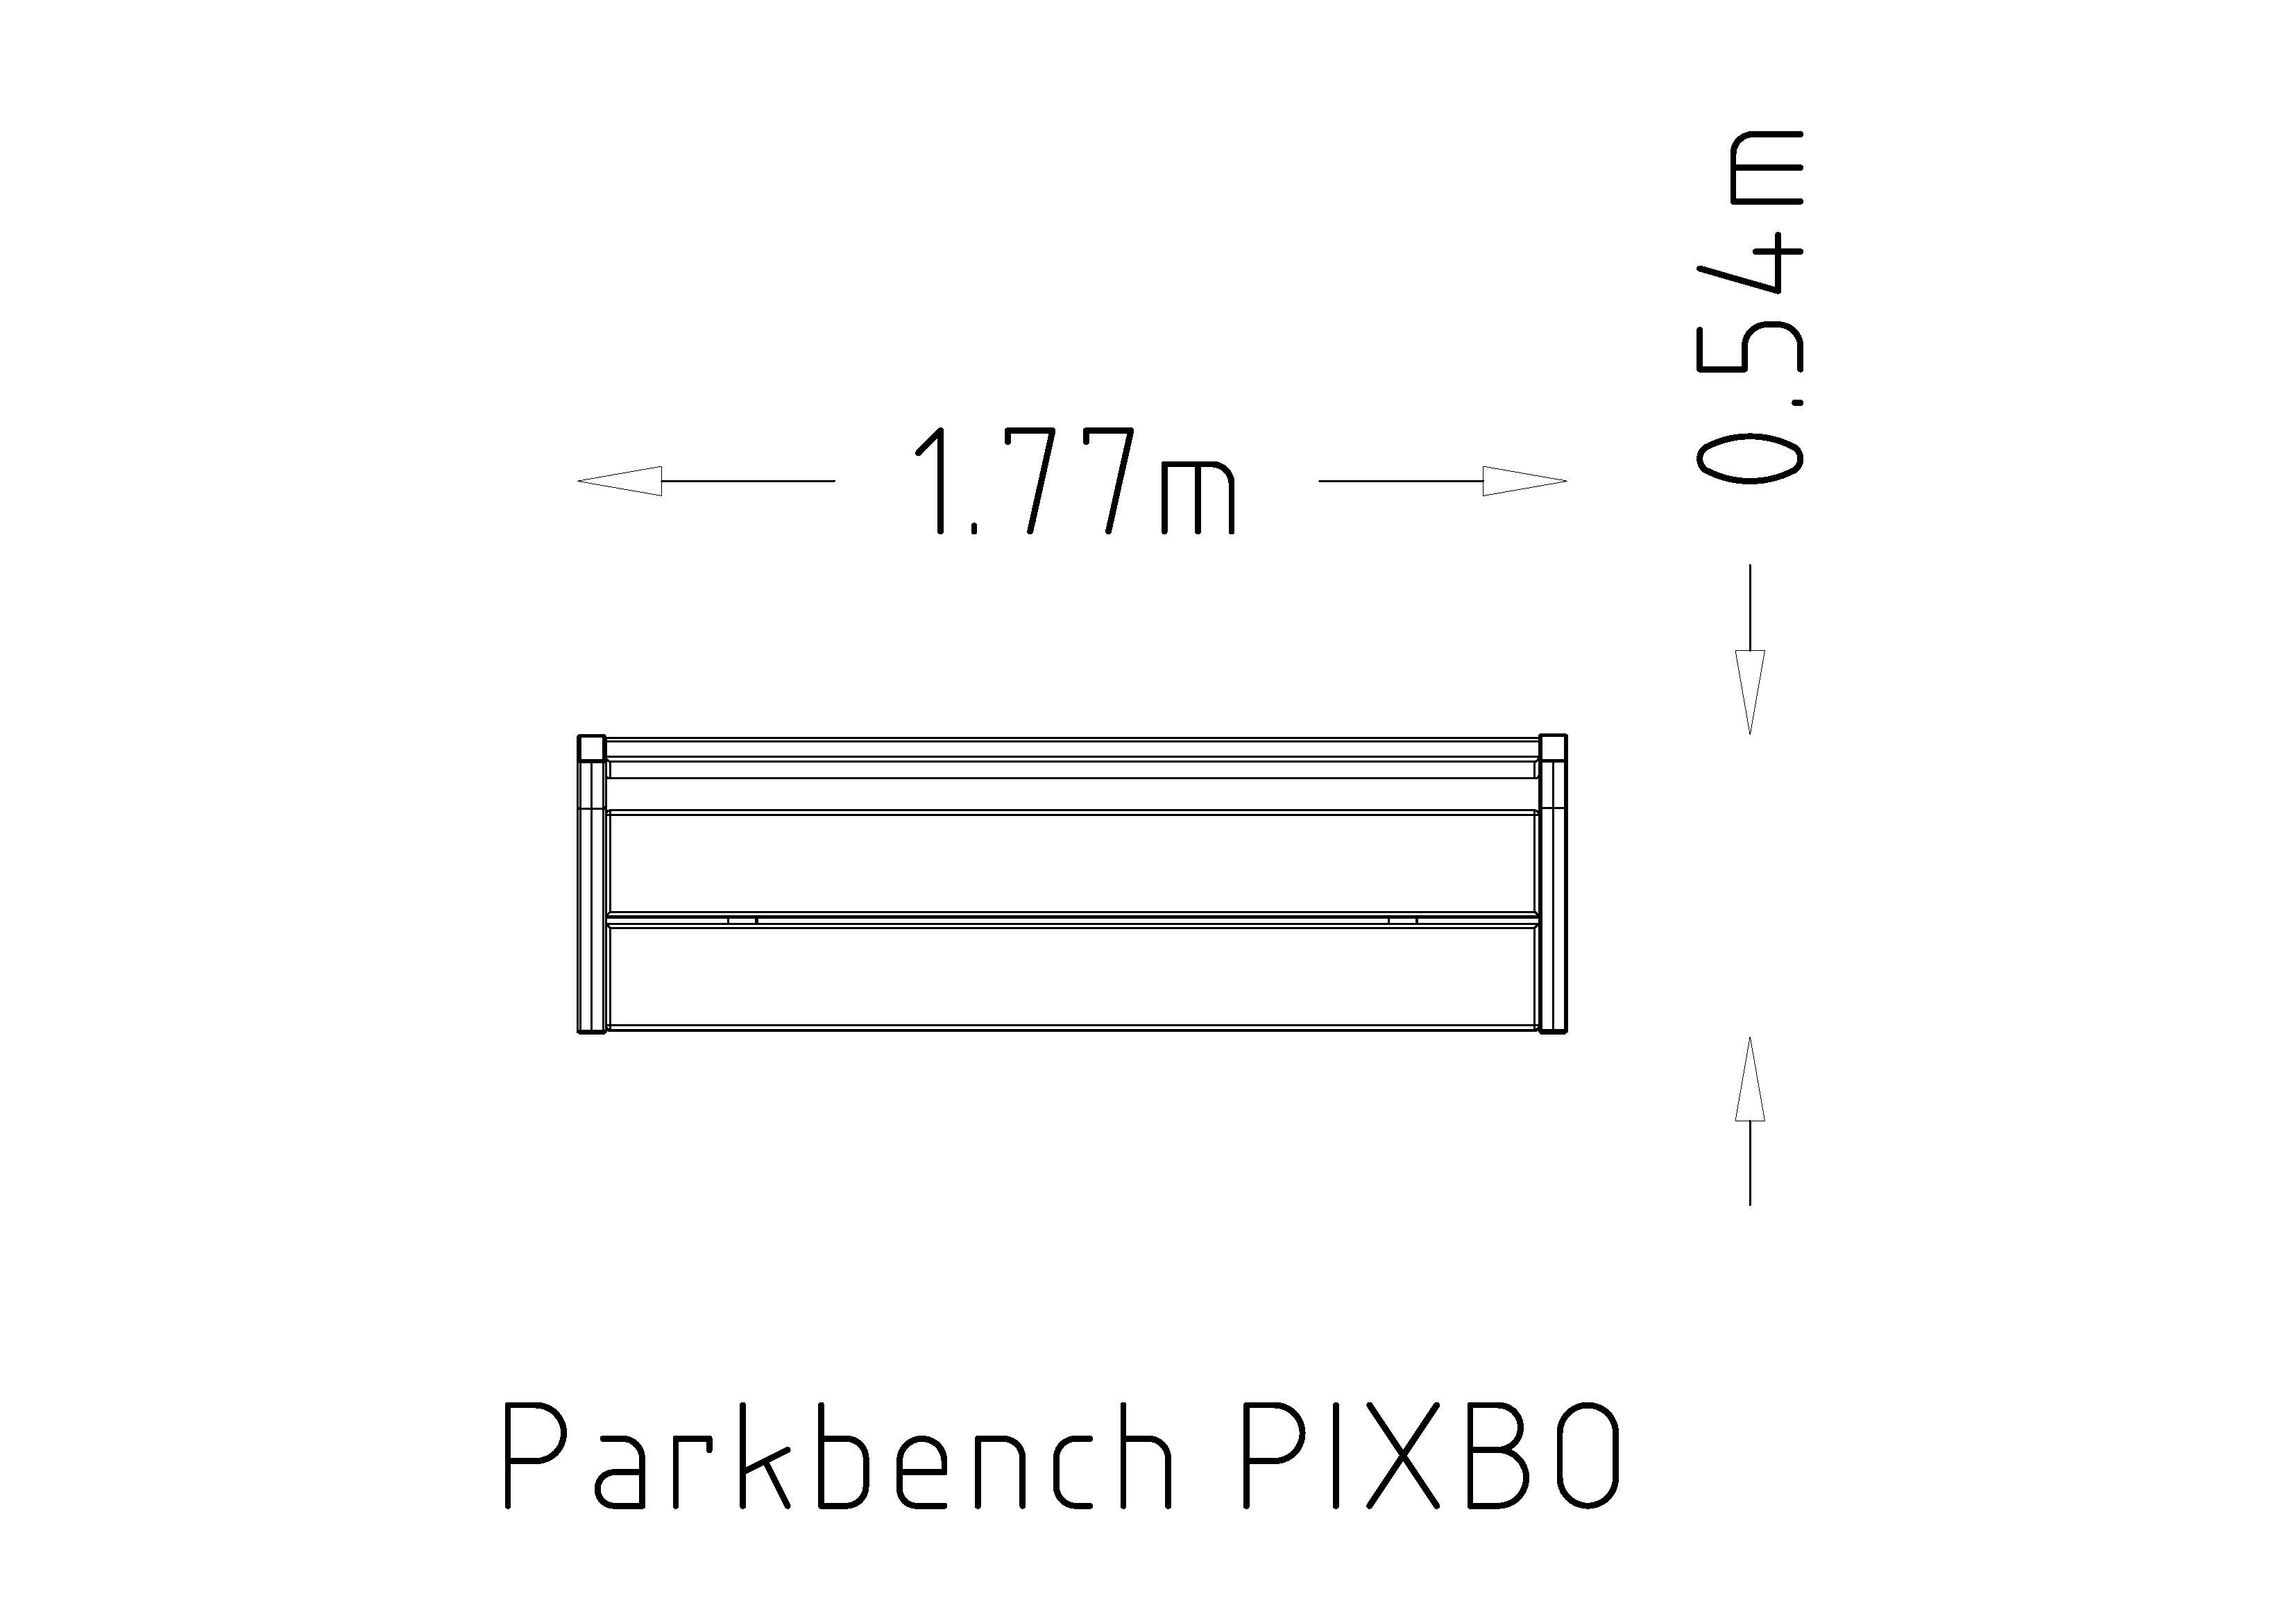 Park Bank Pixbo